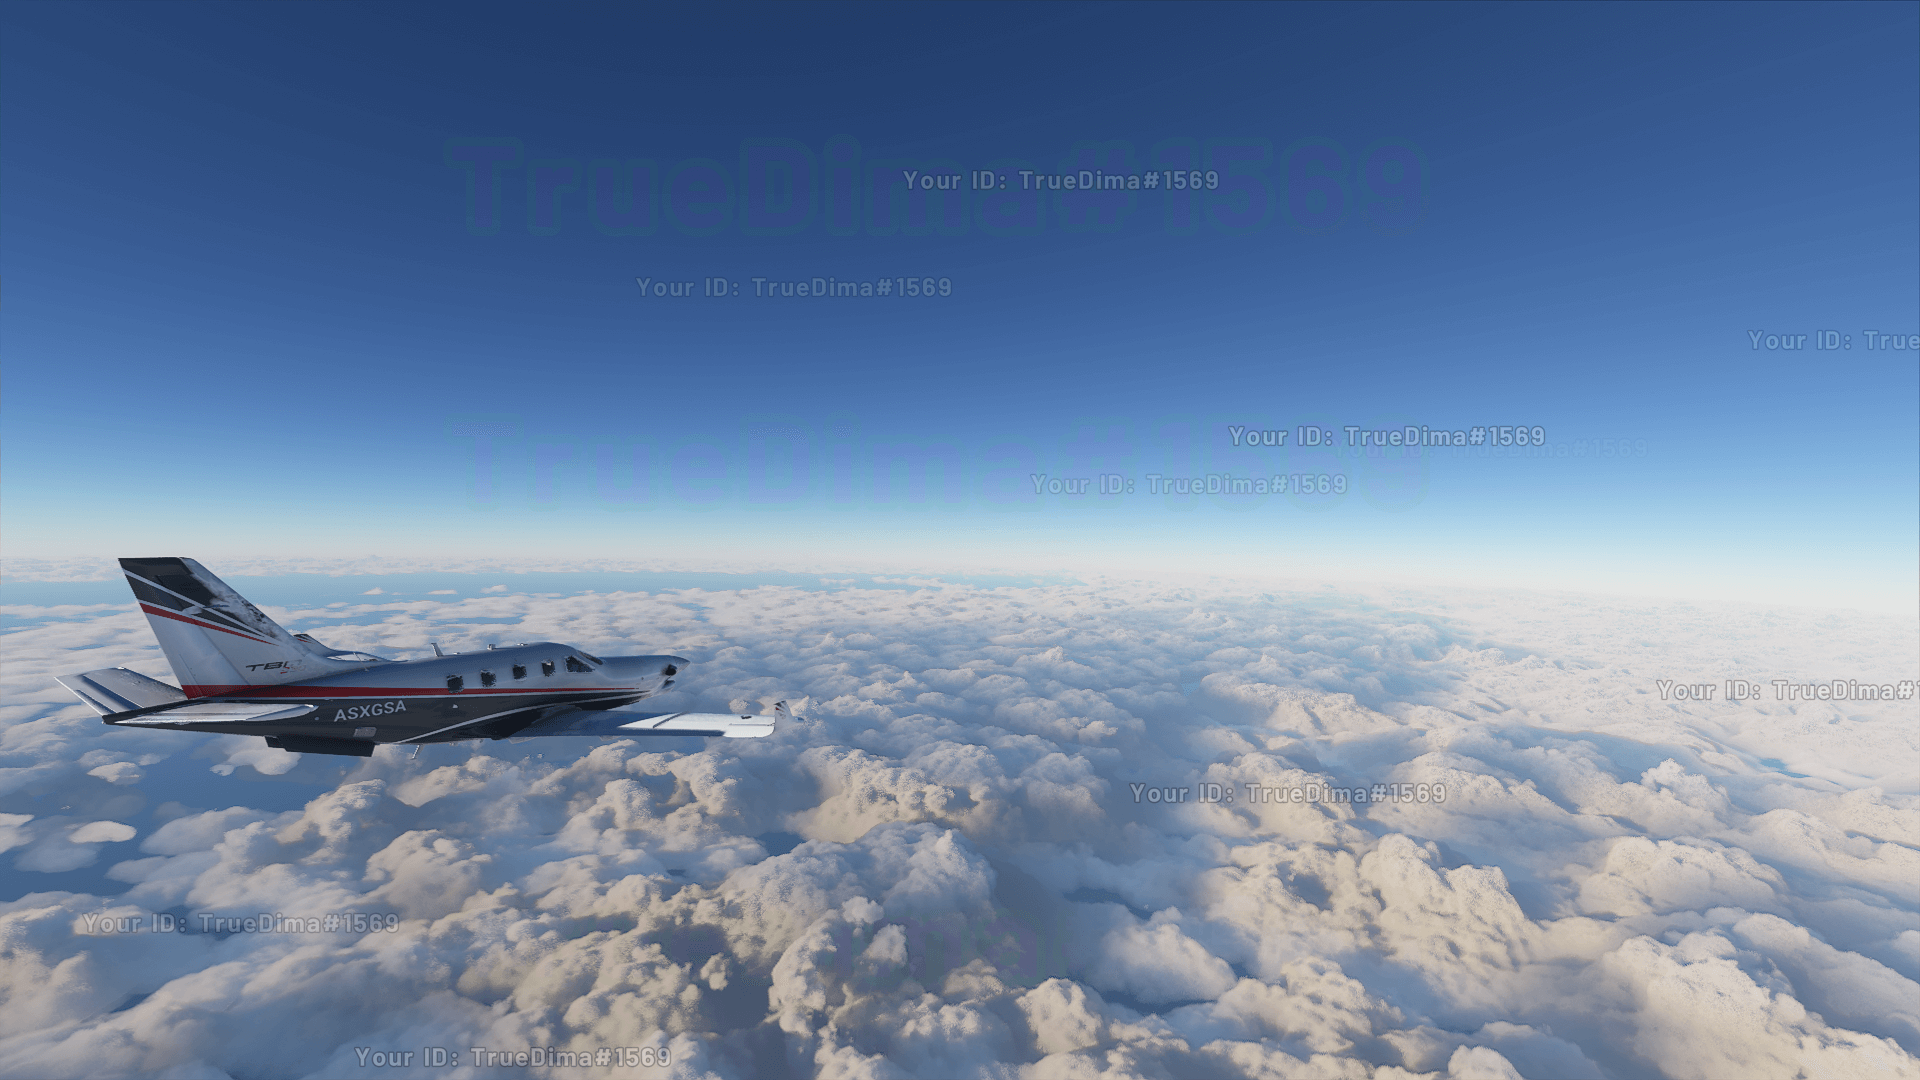 Alpha invitations open again for MS Flight Simulator 2020